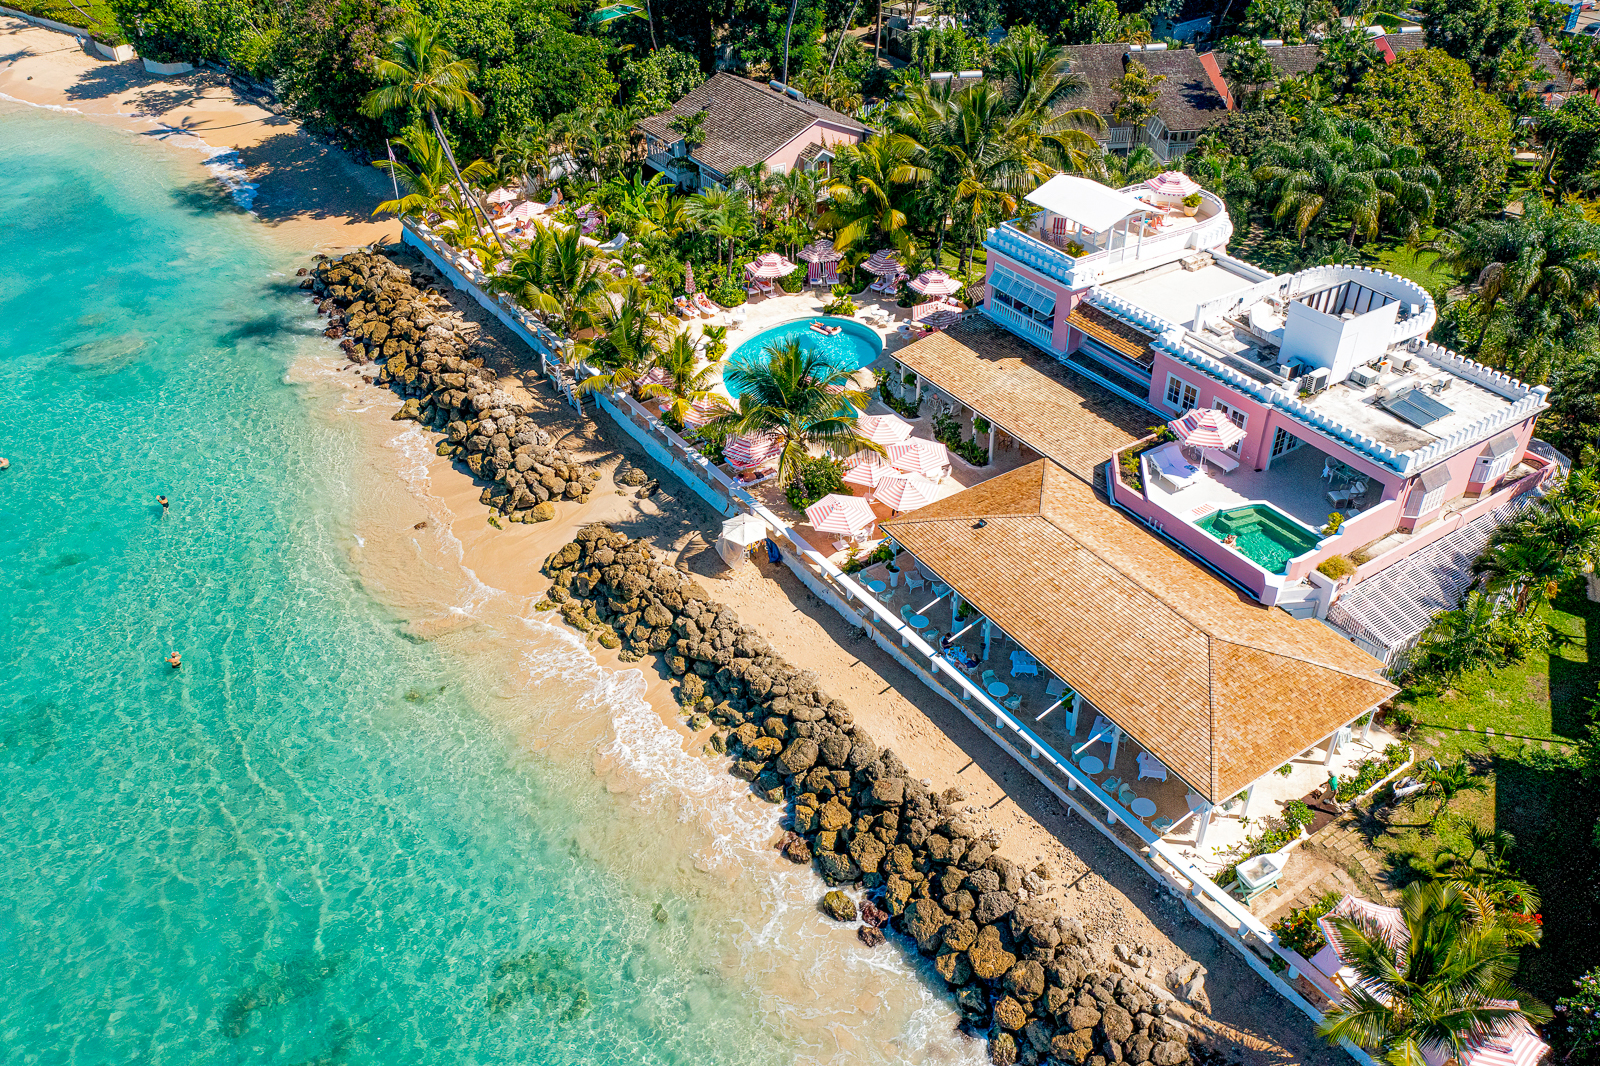 Aerial view of Cobbler's Cove resort in Barbados